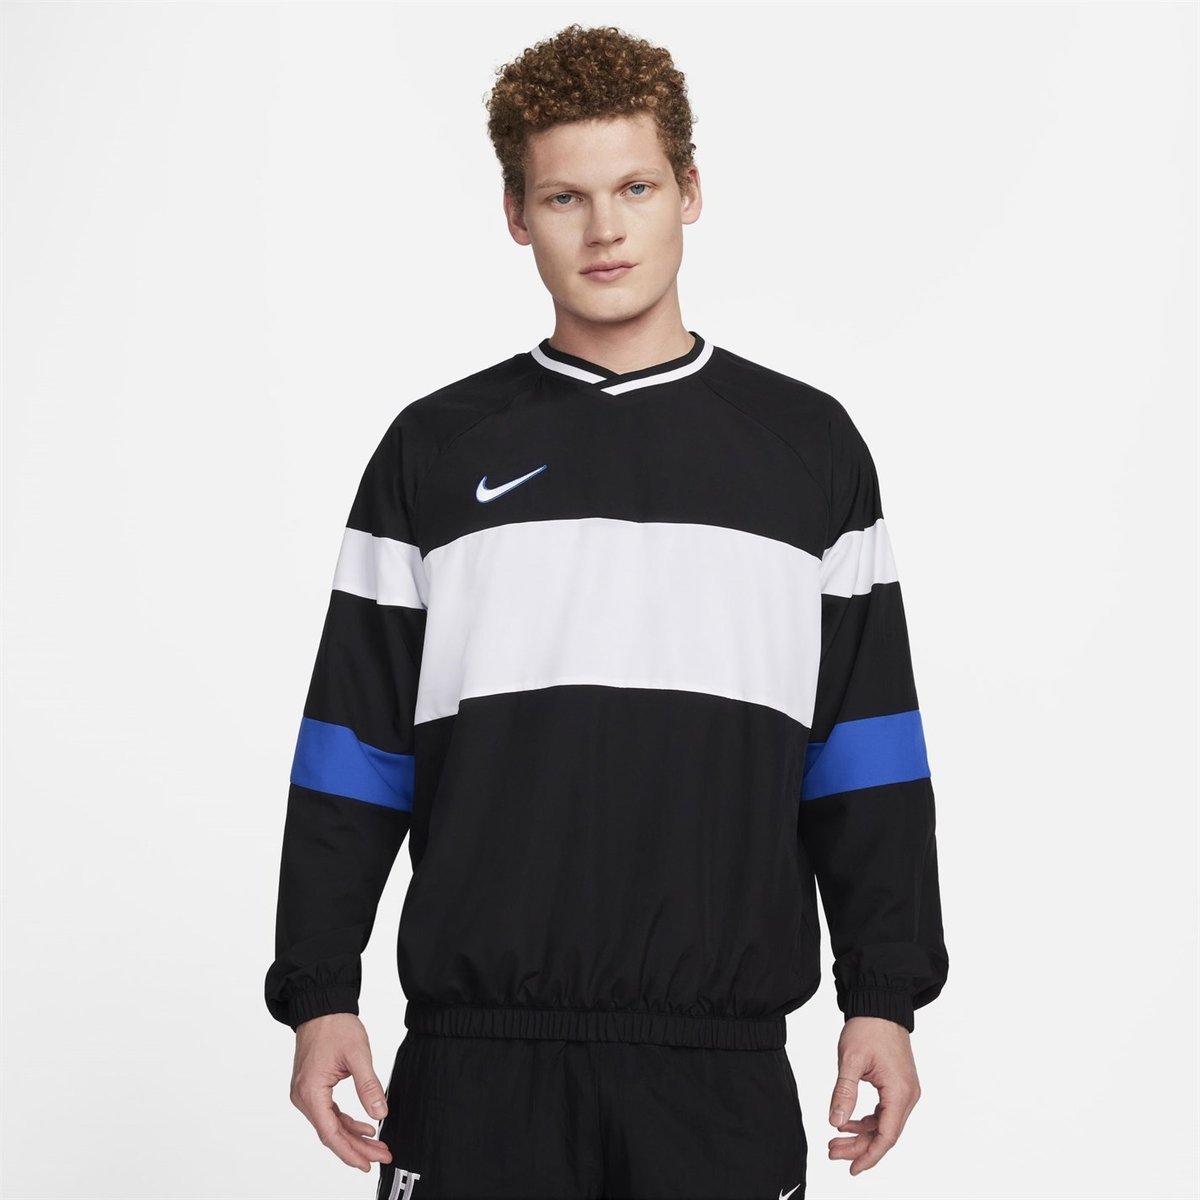 Nike Football Clothing - Lovell Sports